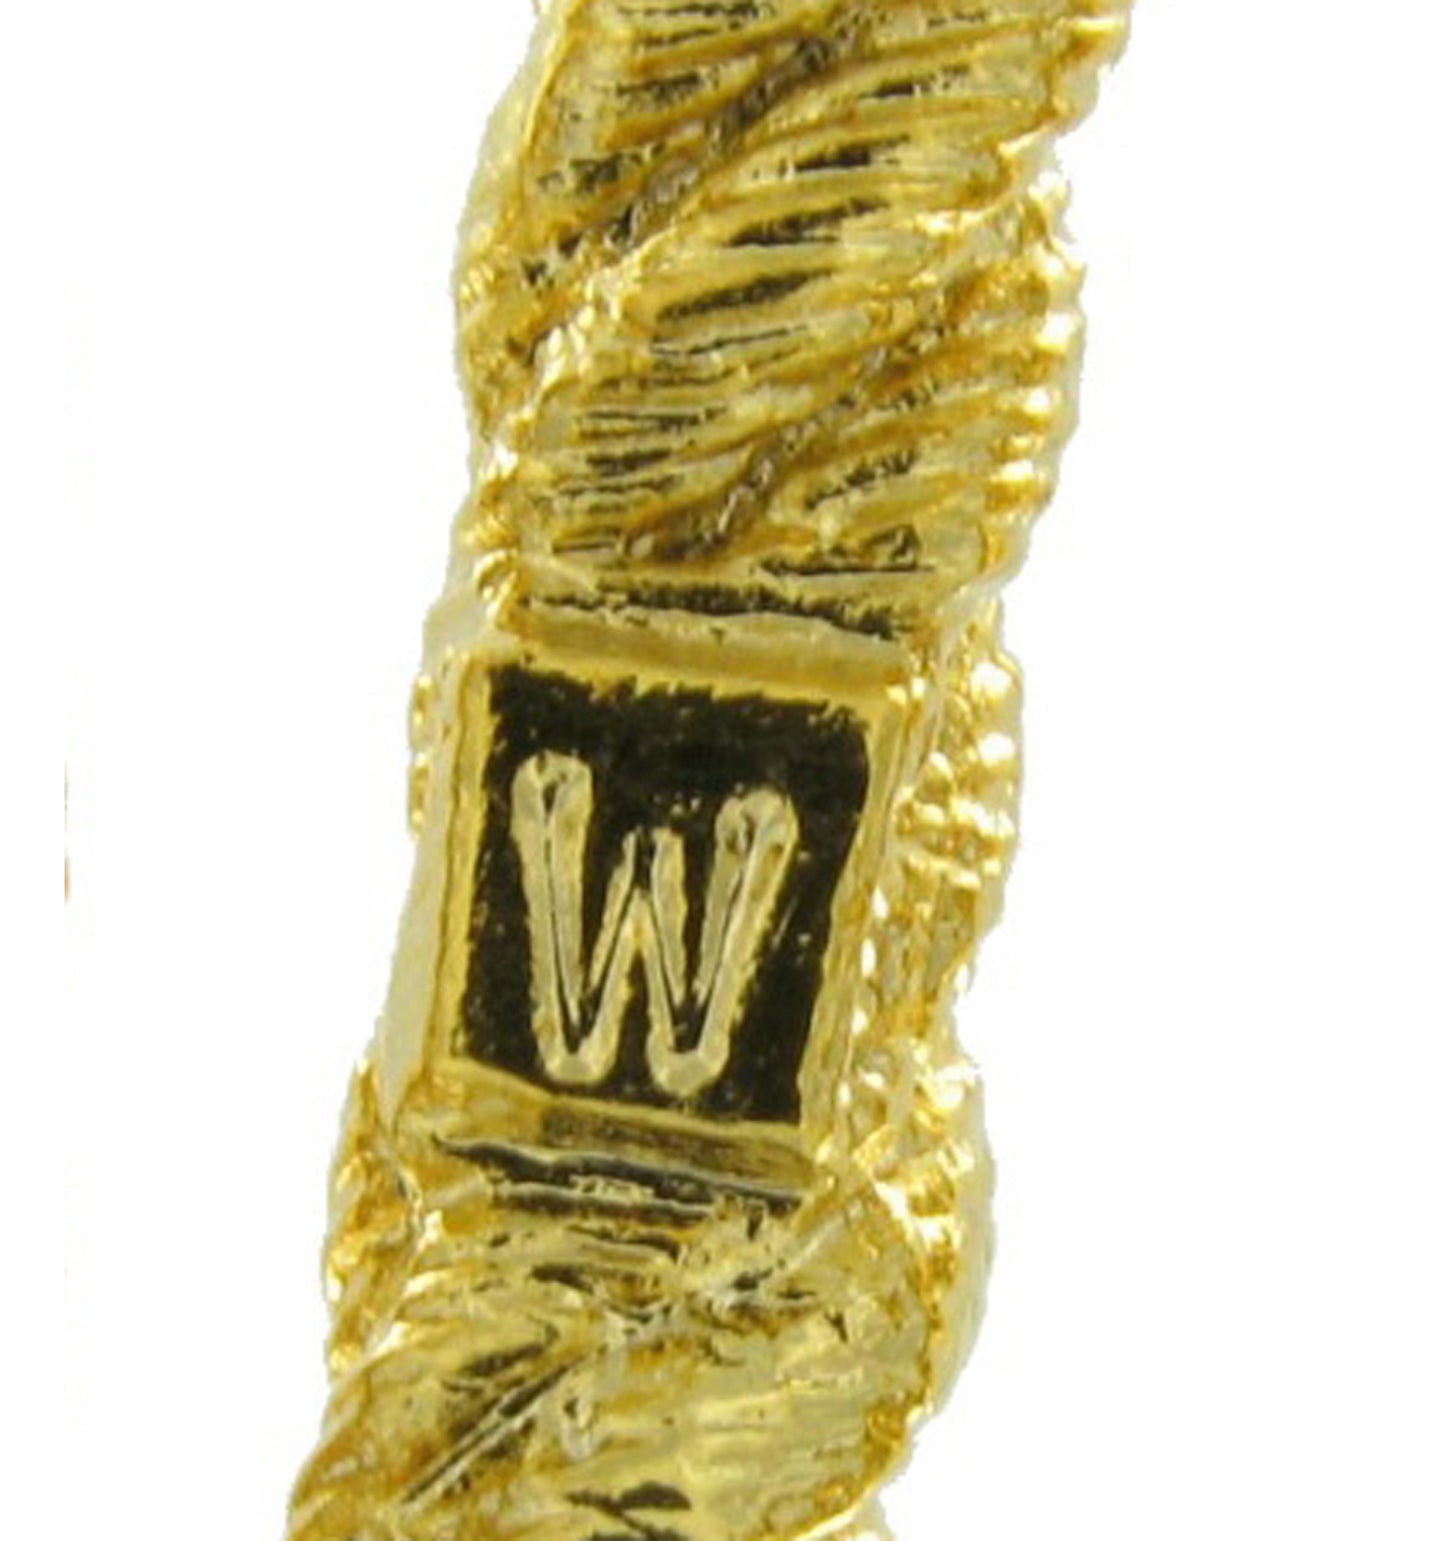 Large Big Script Cursive Gold Tone Rope Initial Letter "R" Pin Brooch 2 1/2"